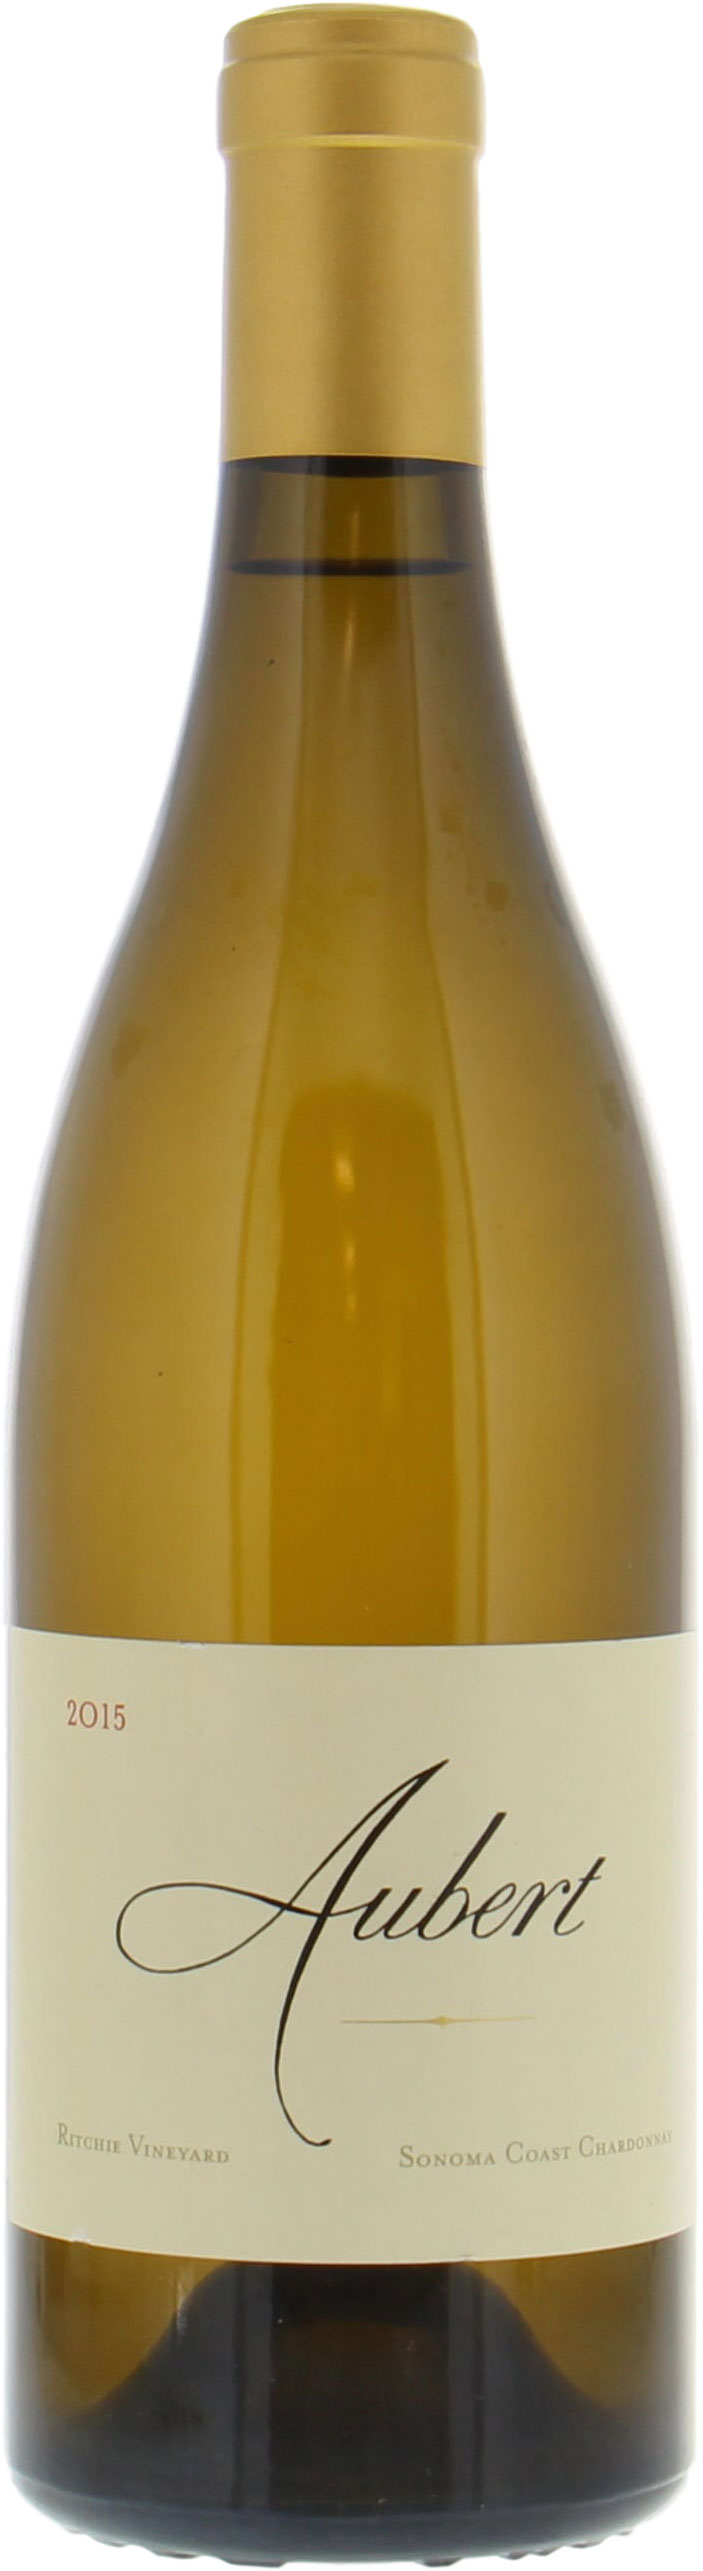 Aubert - Ritchie Chardonnay 2015 Perfect